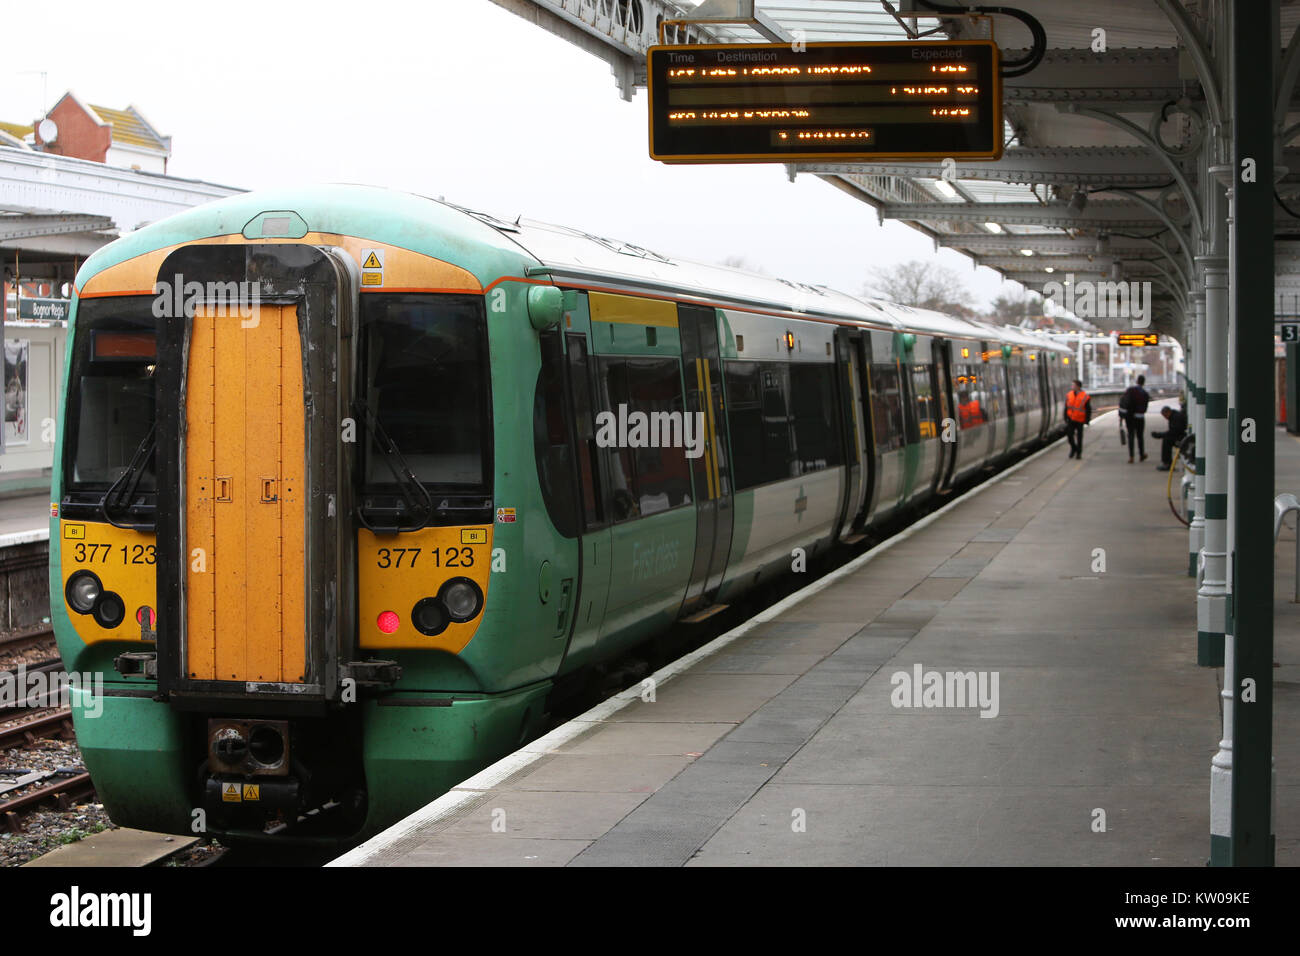 Bognor Regis Train Station, West Sussex, UK. Stock Photo